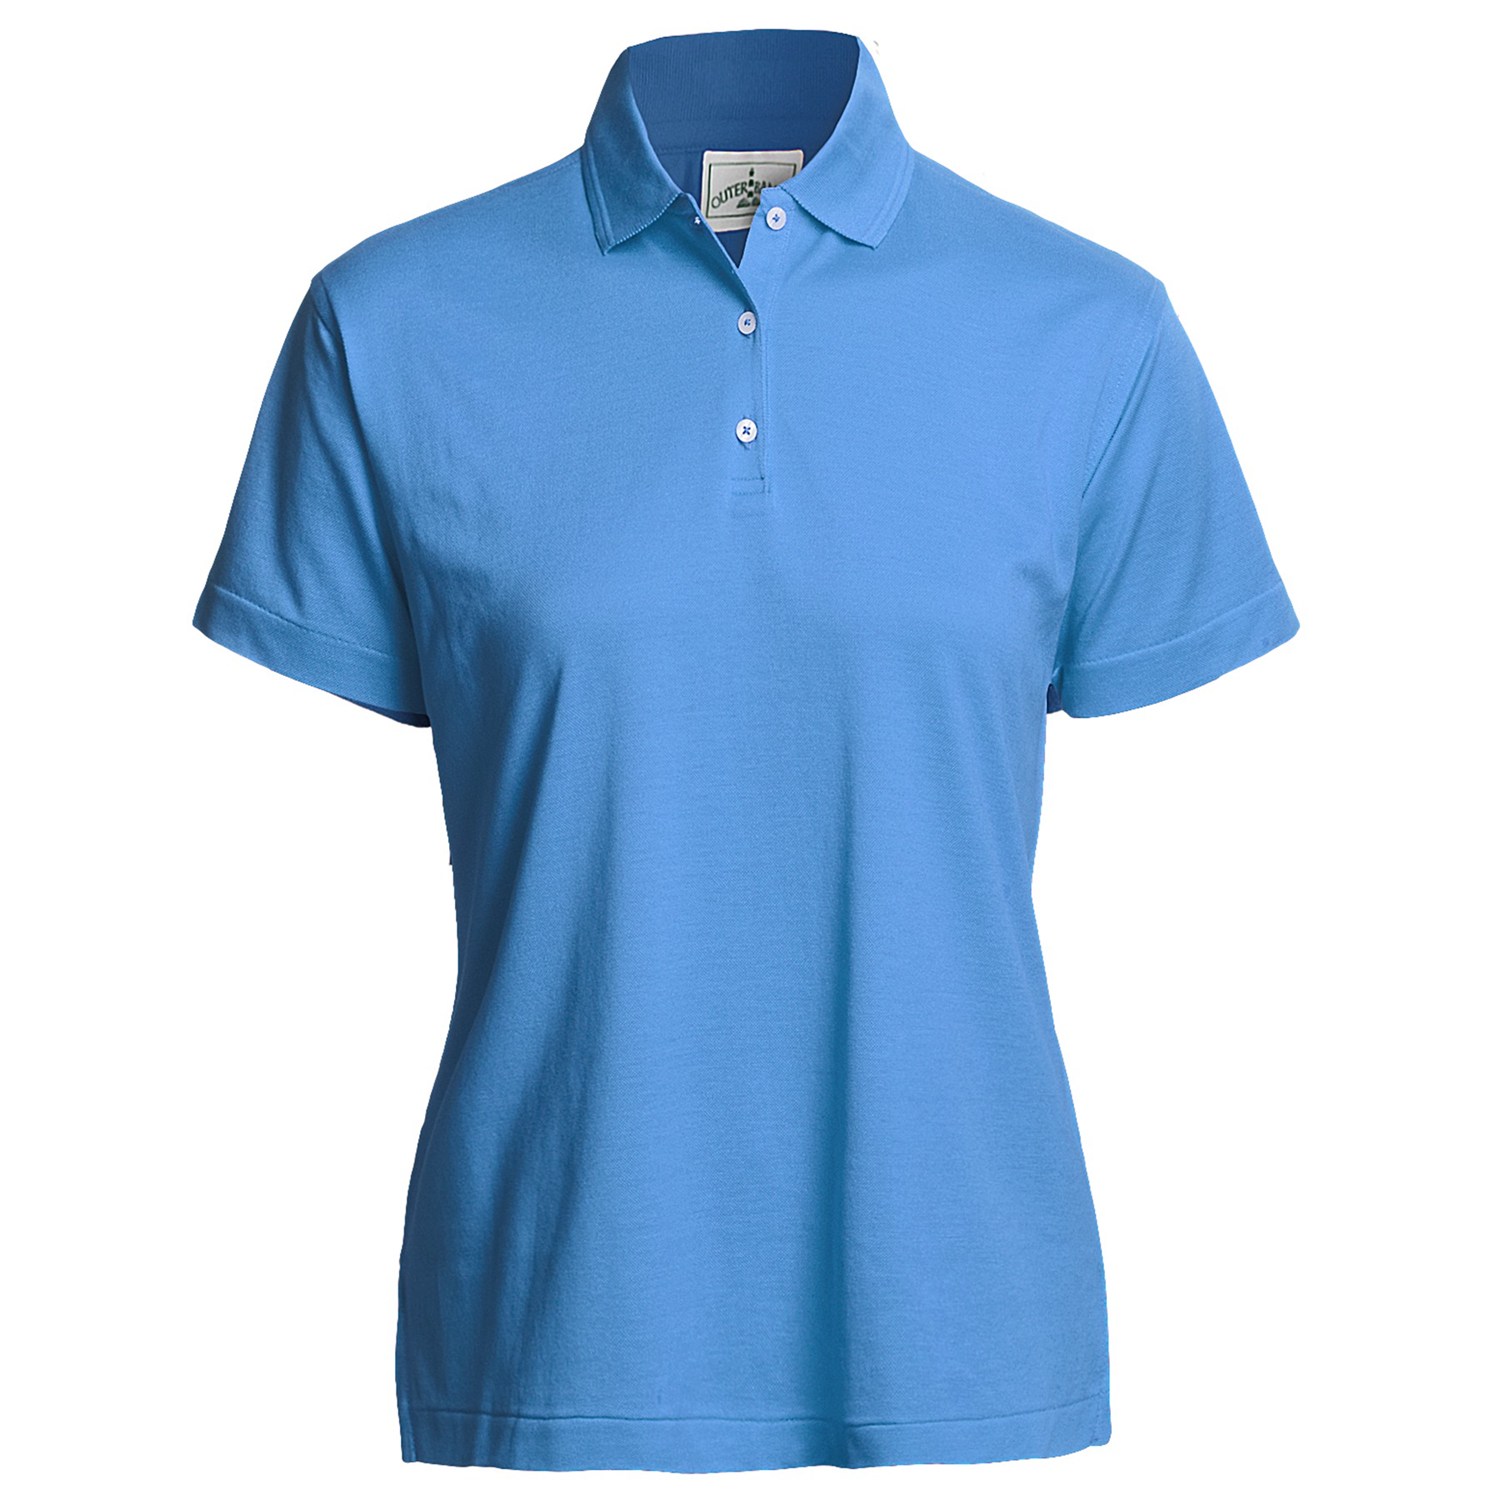 Outer Banks Polo Shirt - Mercerized Pima Pique Cotton, Short ...